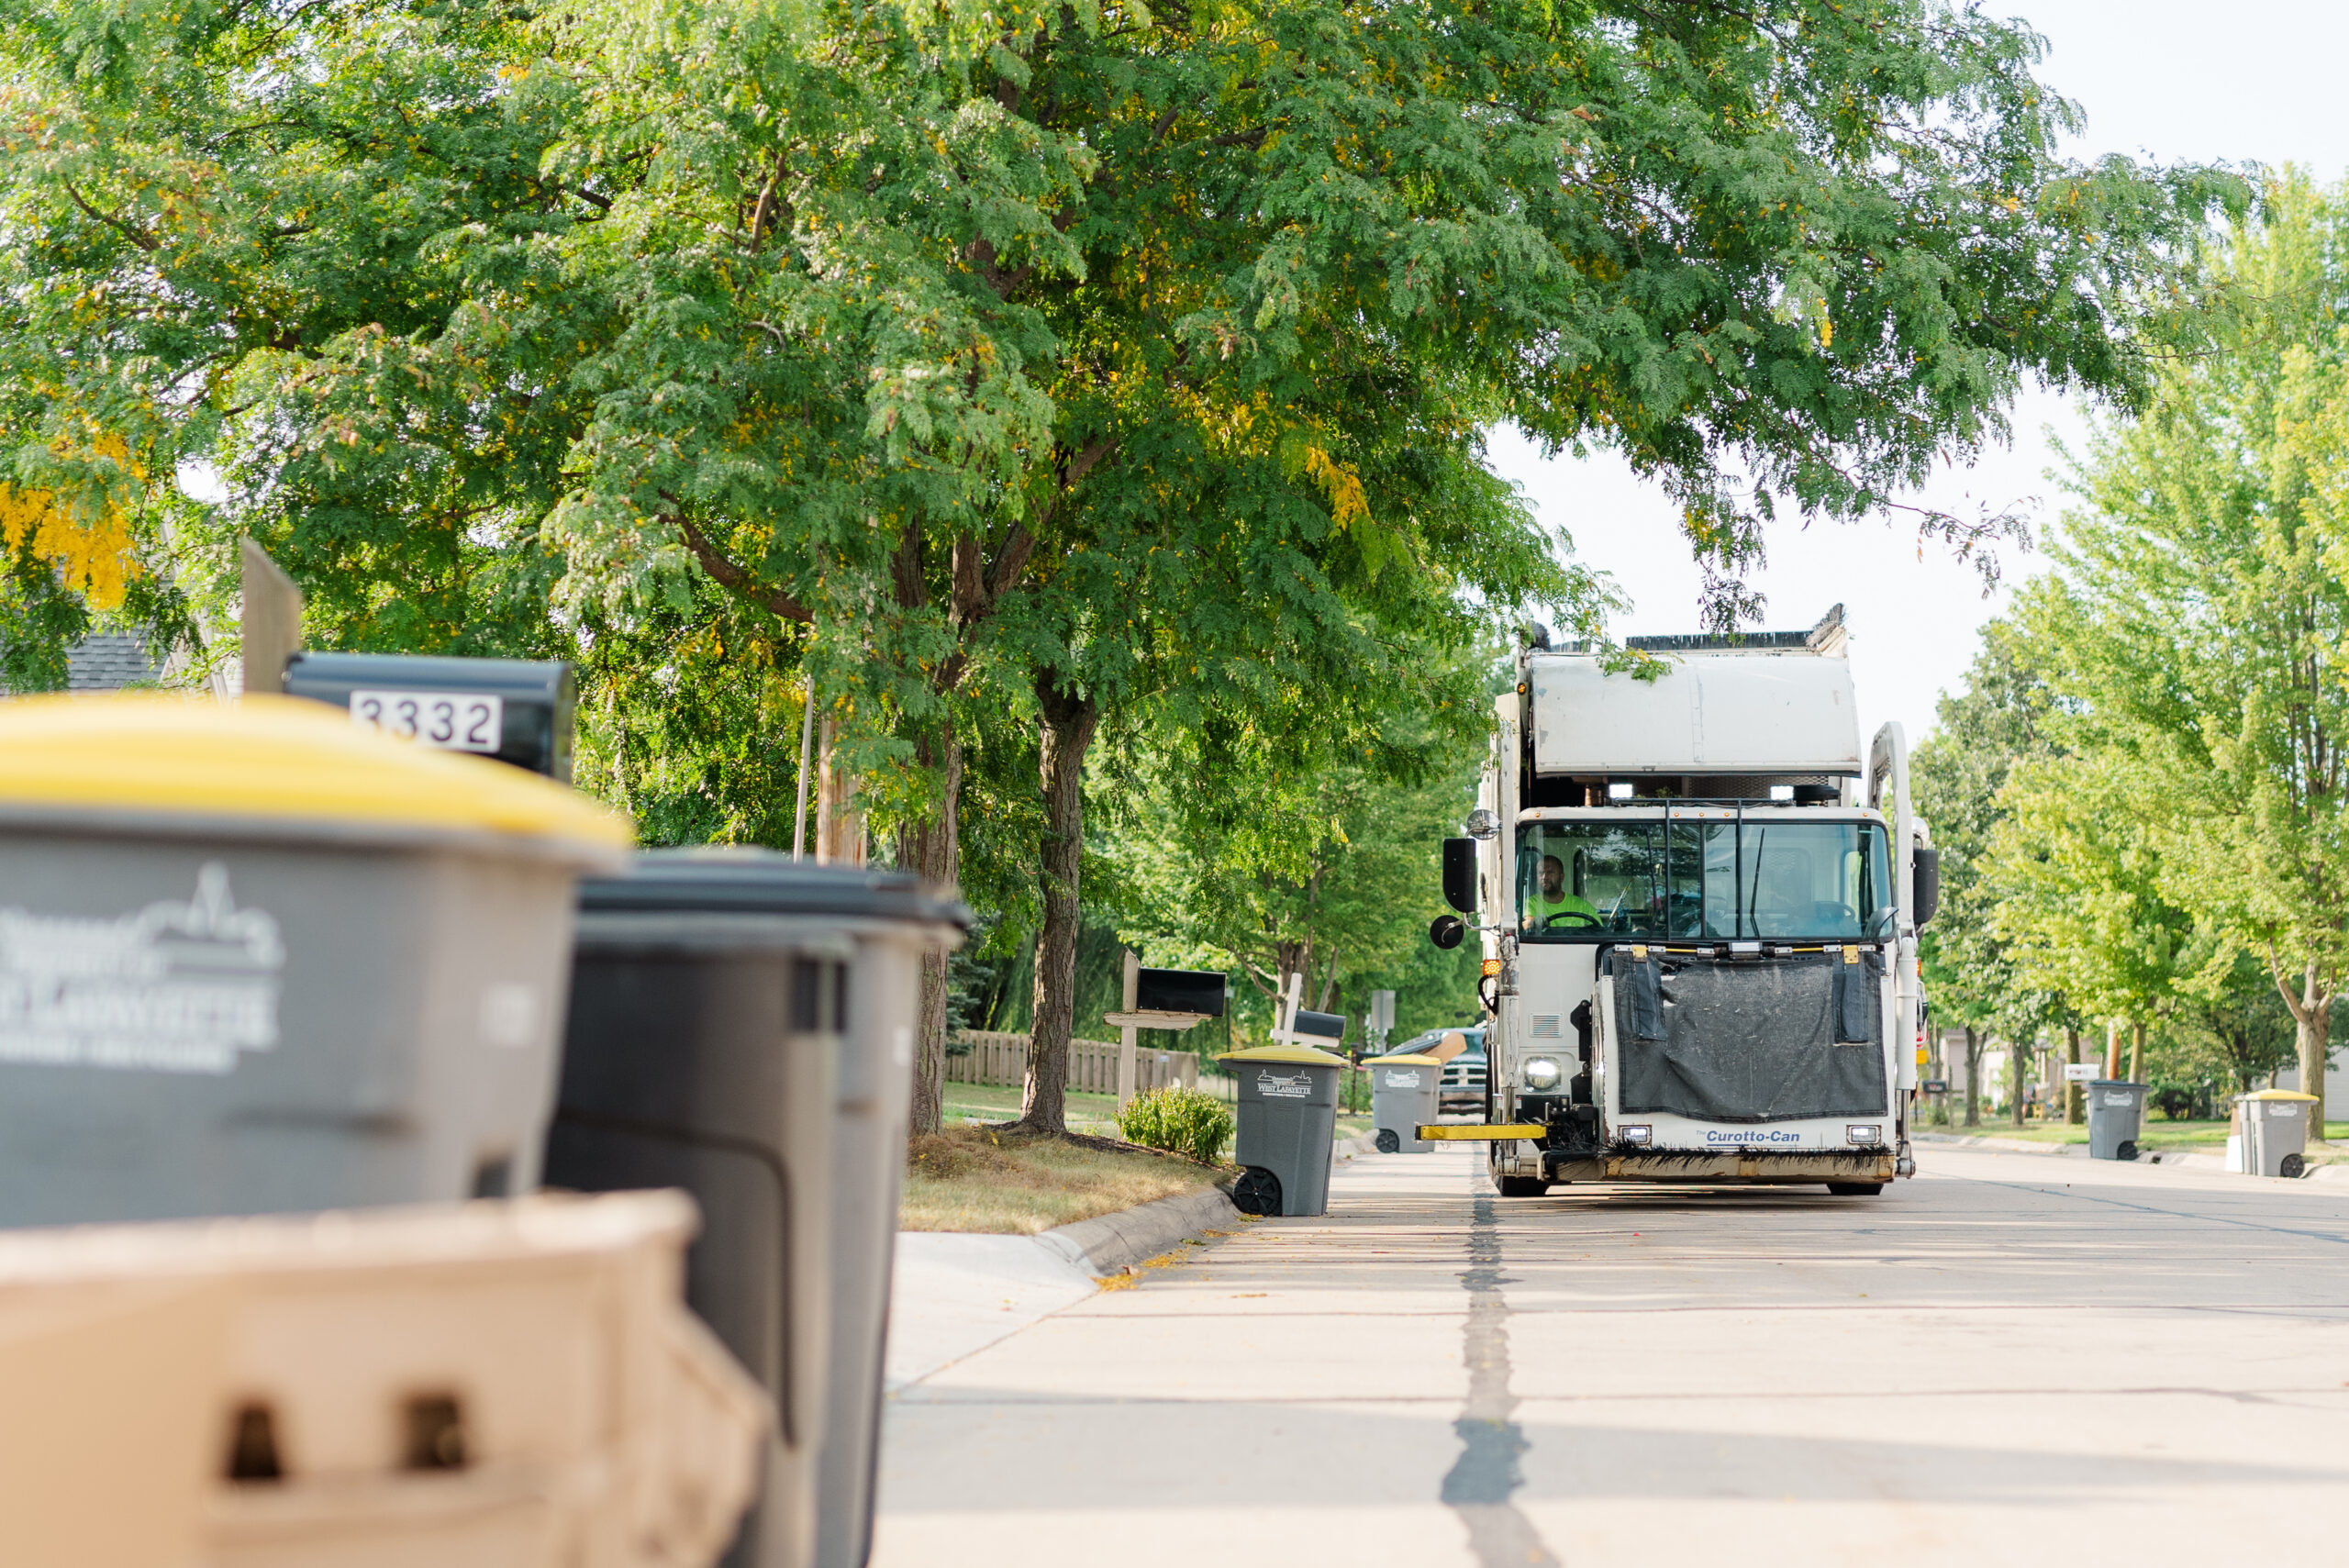 Truck collecting waste bins in suburban neighborhood